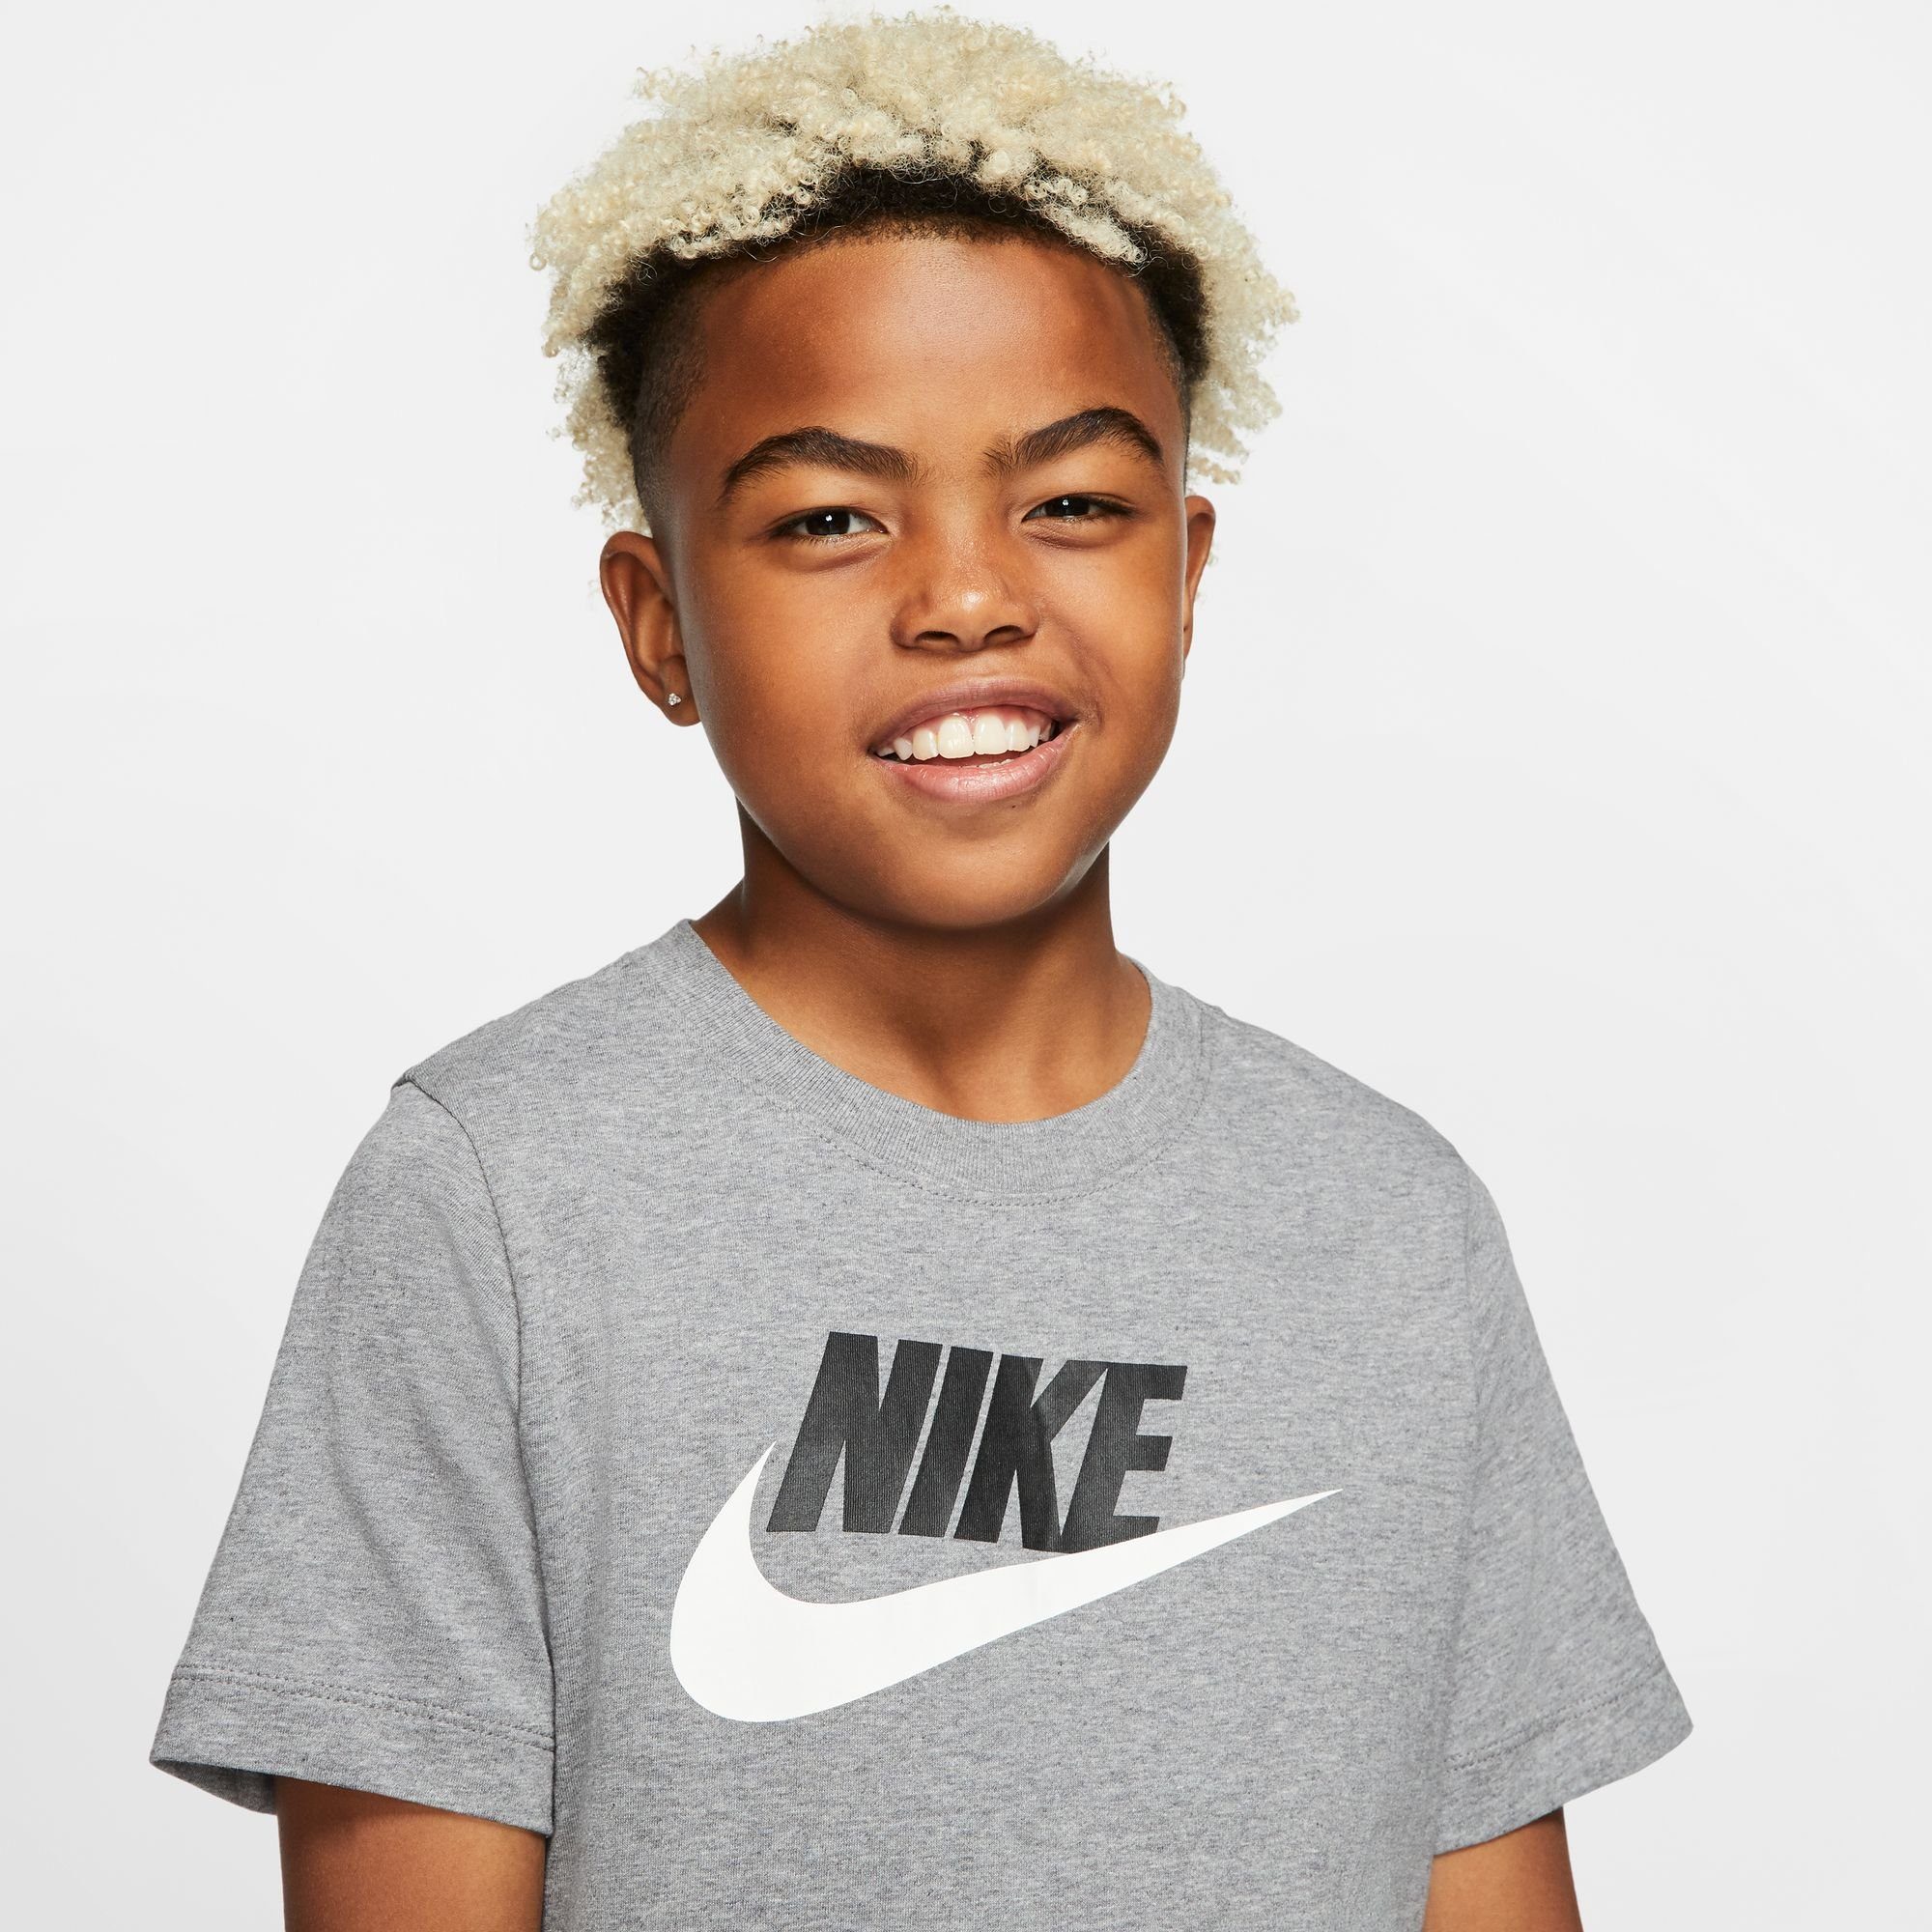 Nike KIDS' grau-meliert COTTON T-SHIRT T-Shirt BIG Sportswear